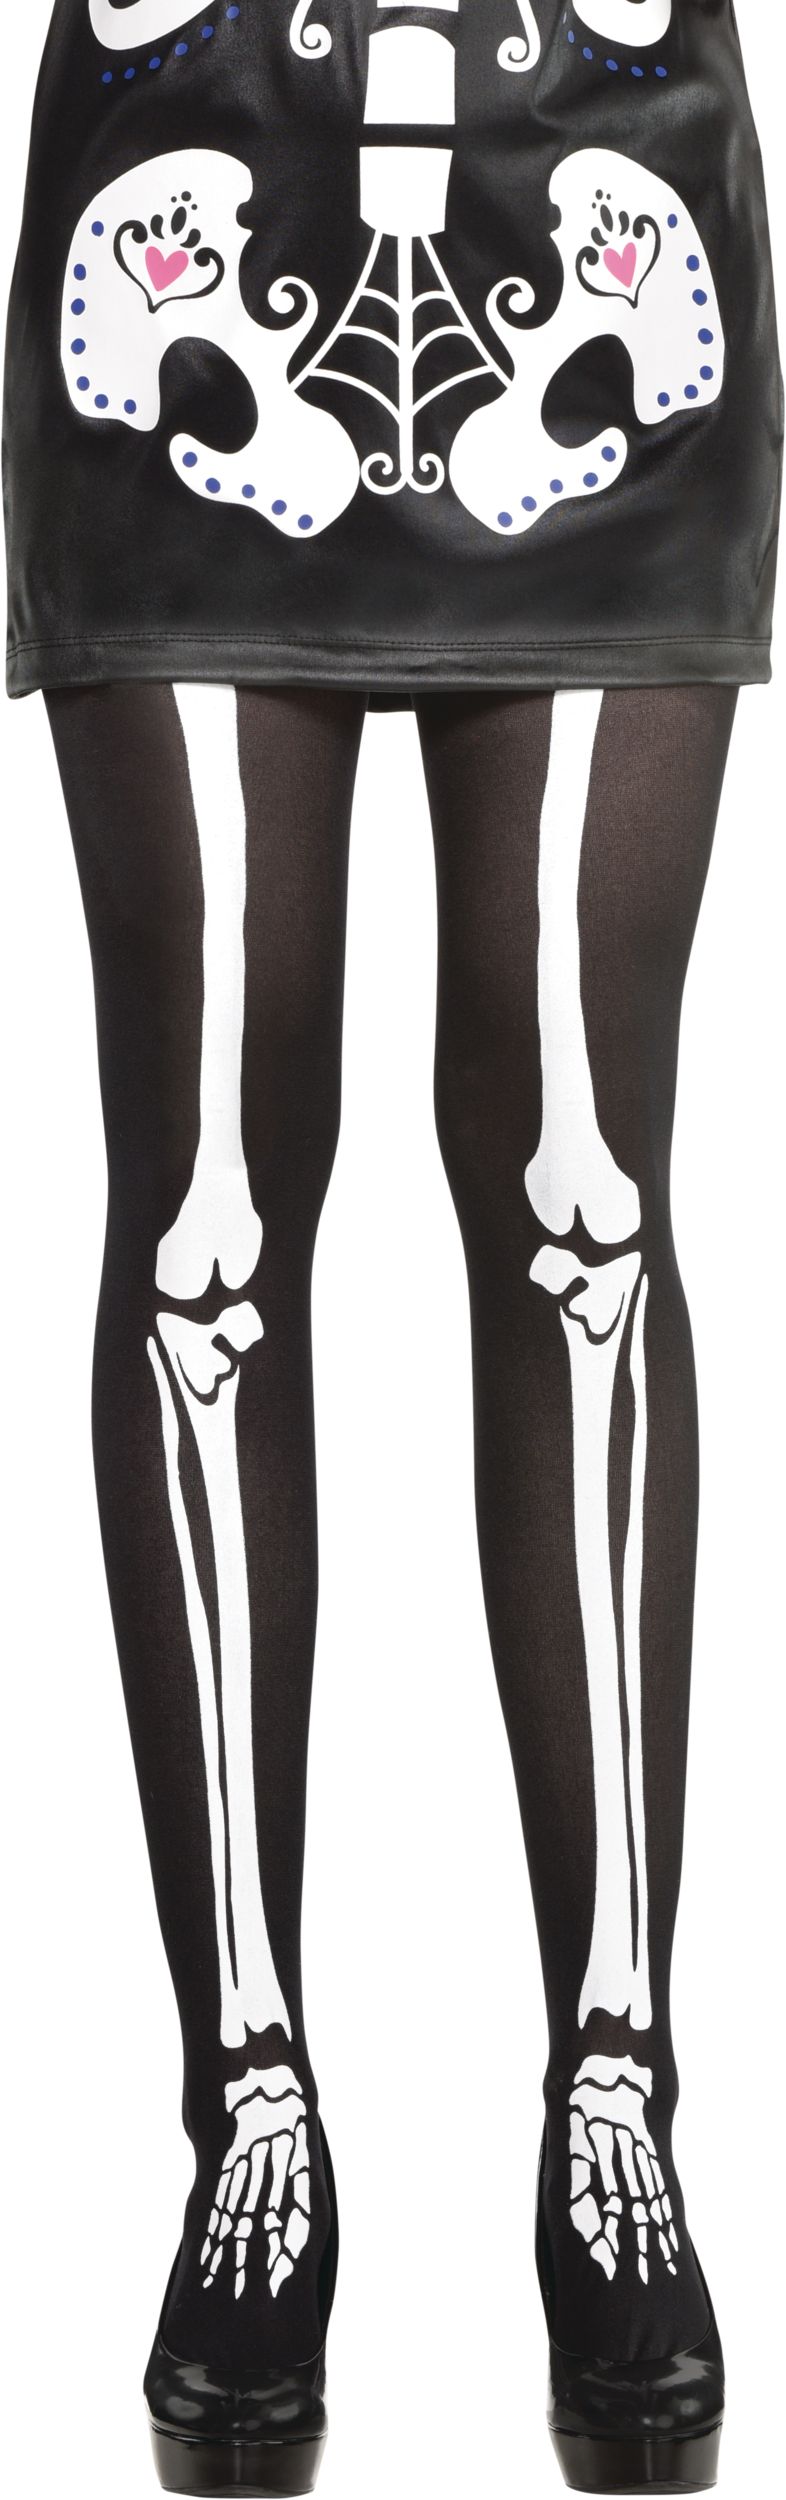 Adult Skeleton Bone Semi-Opaque Seamless Tights, Black/White, M/L